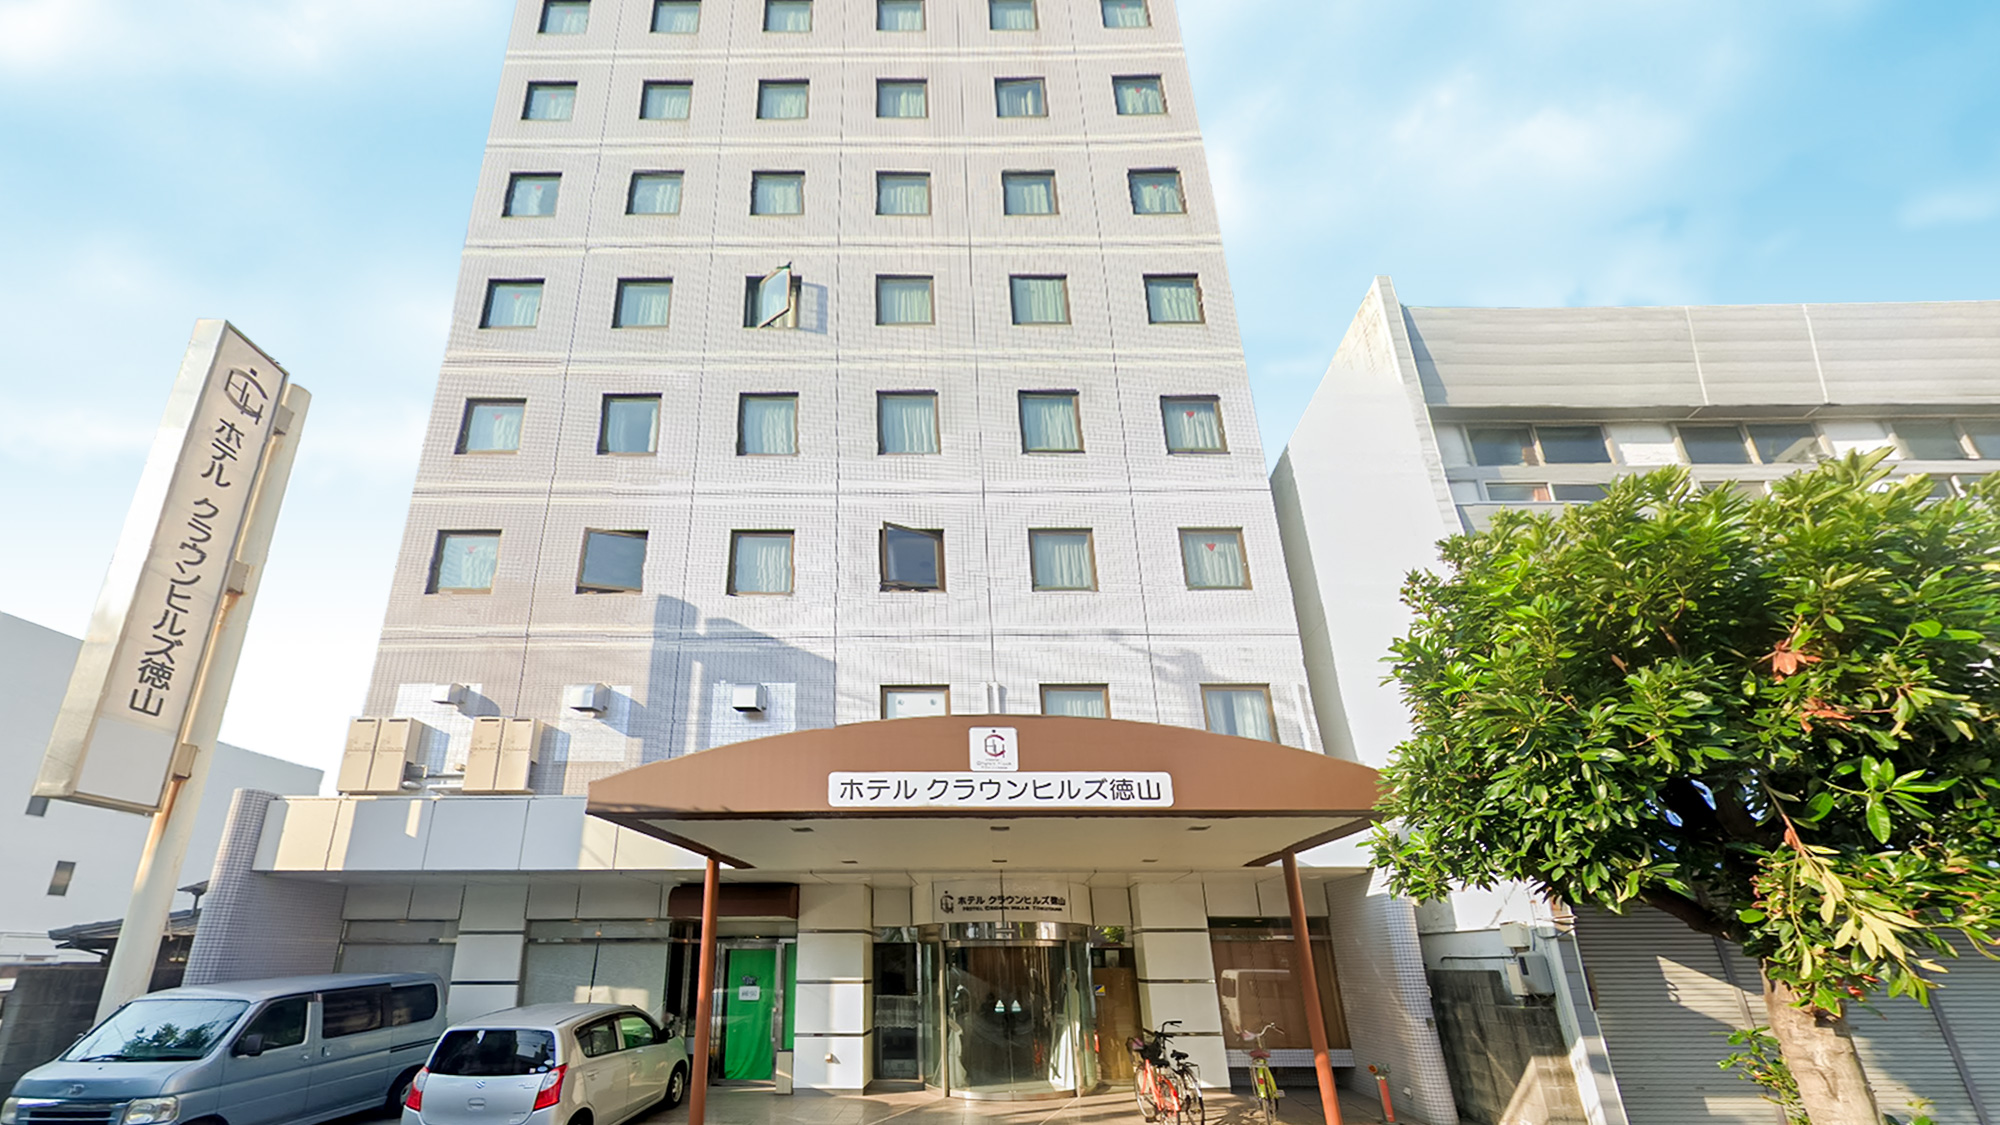 Hotel Crown Hills Tokuyama (BBH Hotel Group)